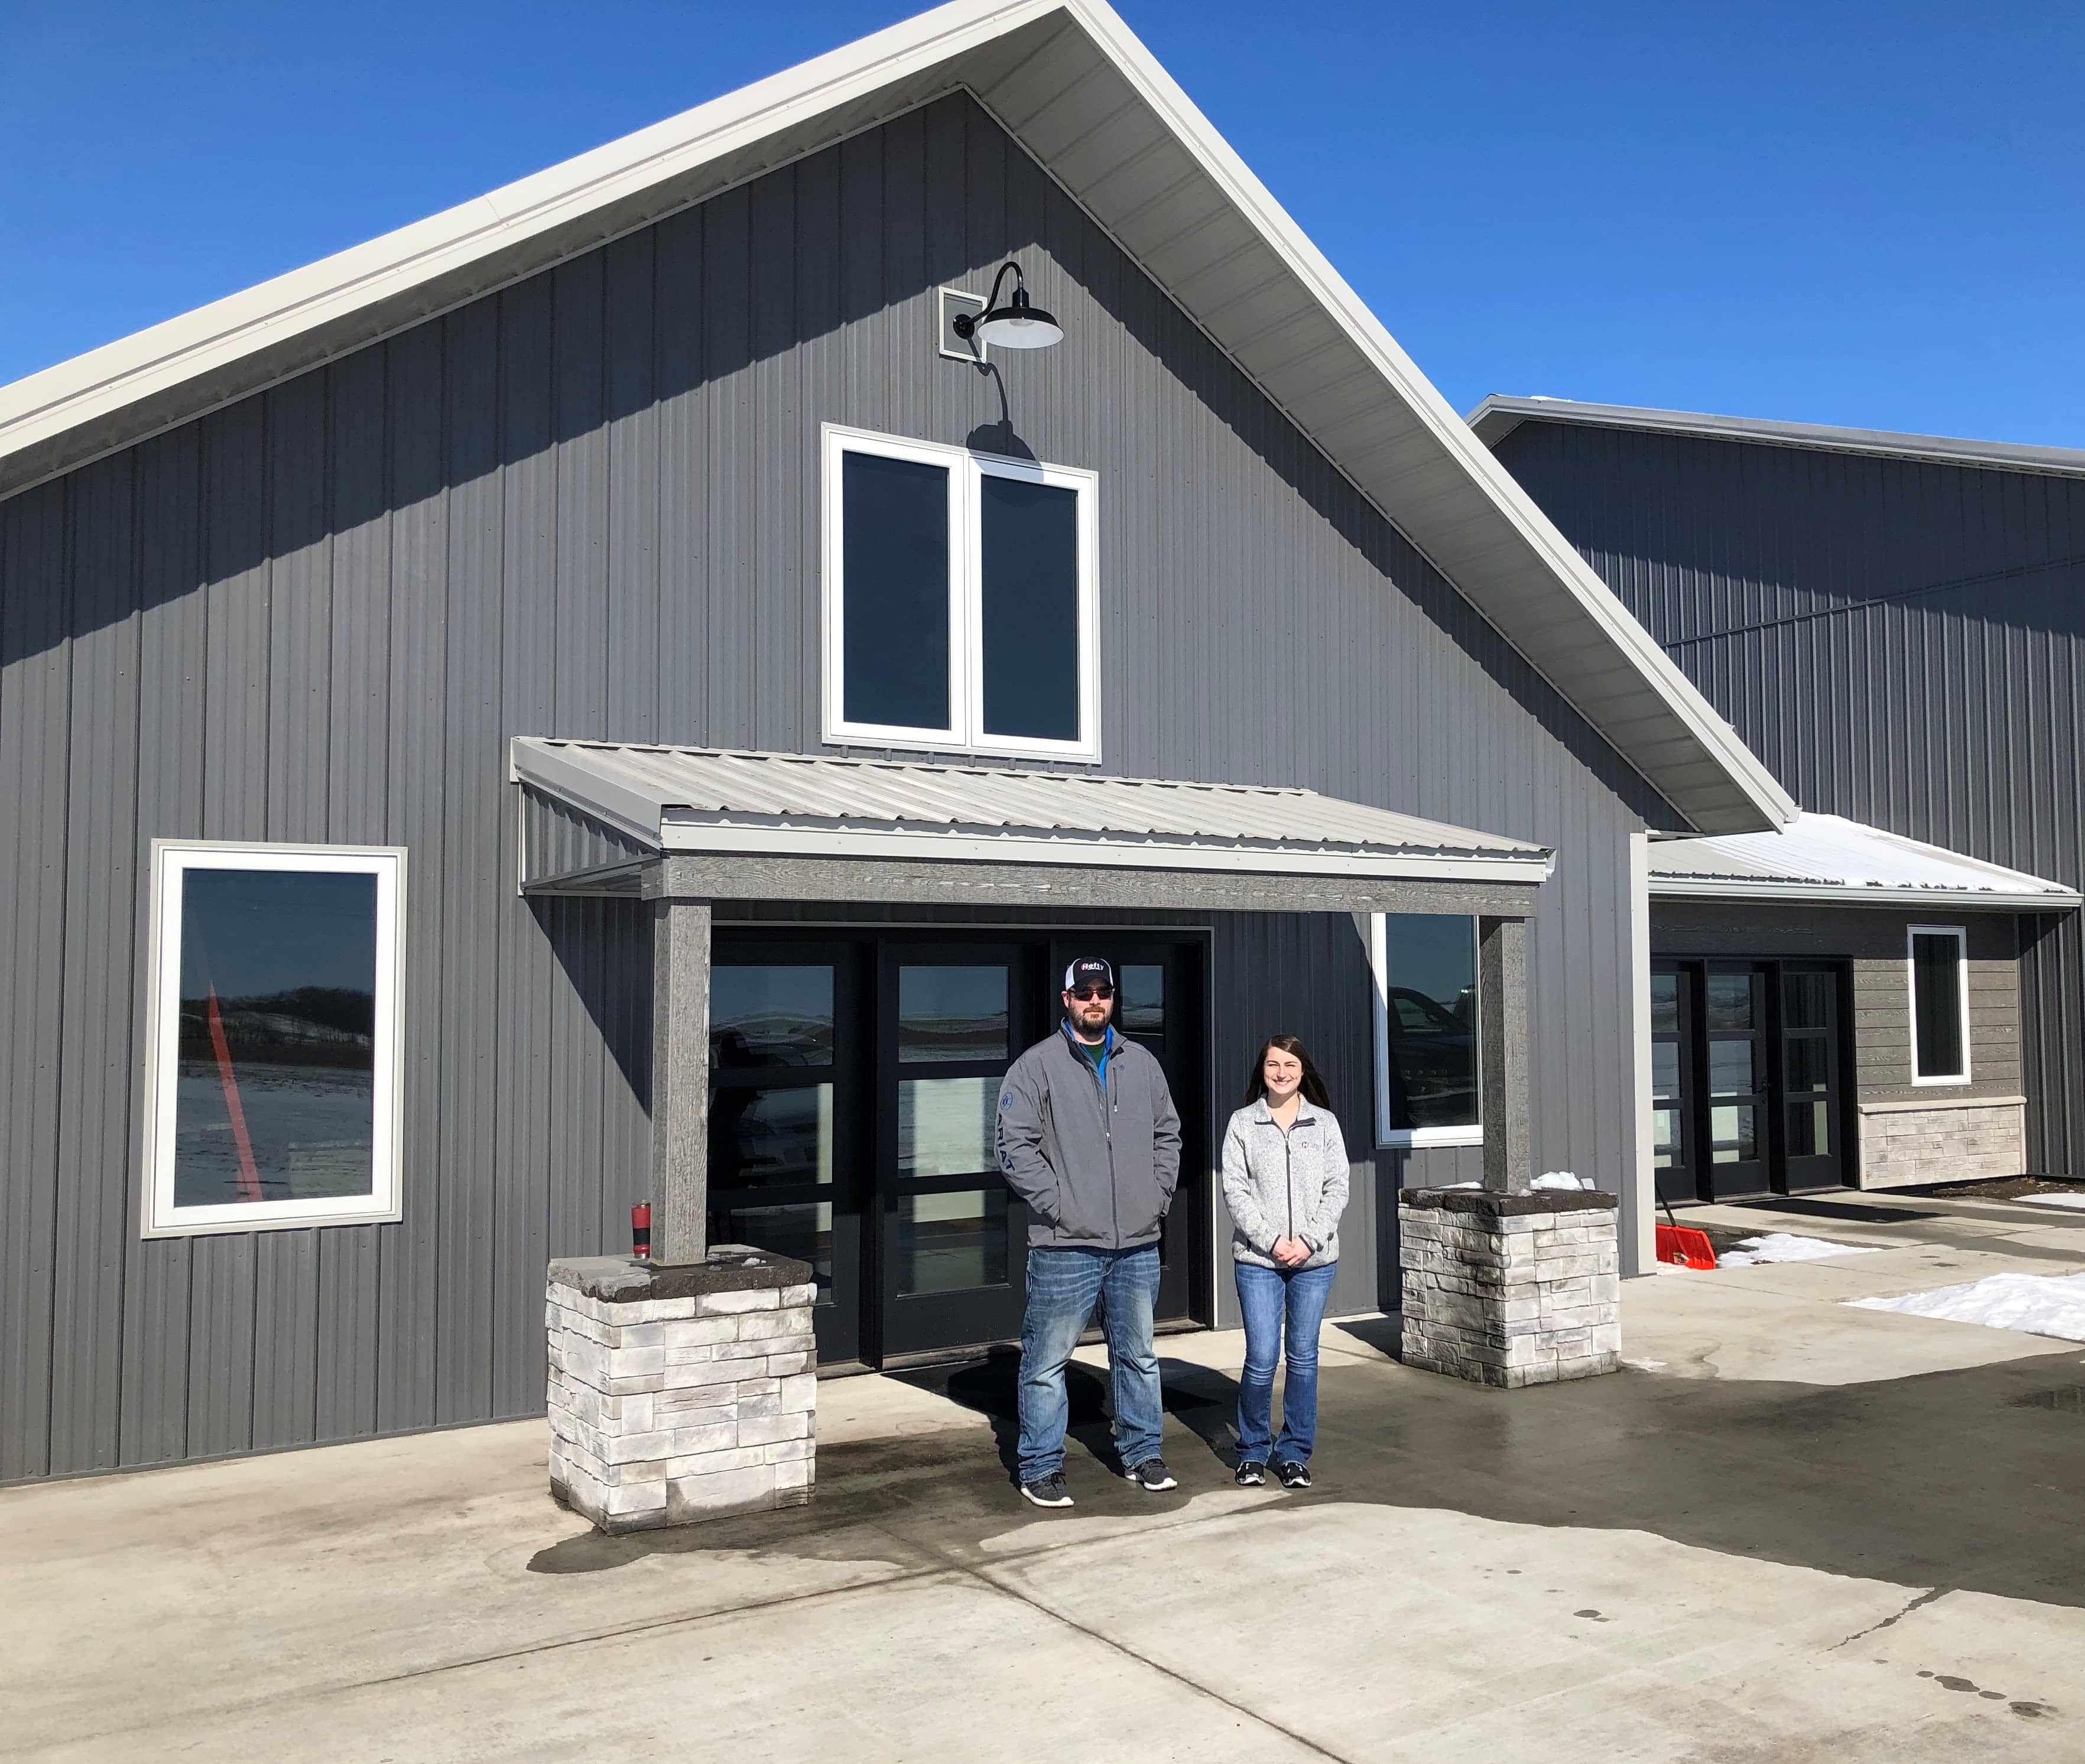 New Hefty Seed Facility In Barnes County News Dakota